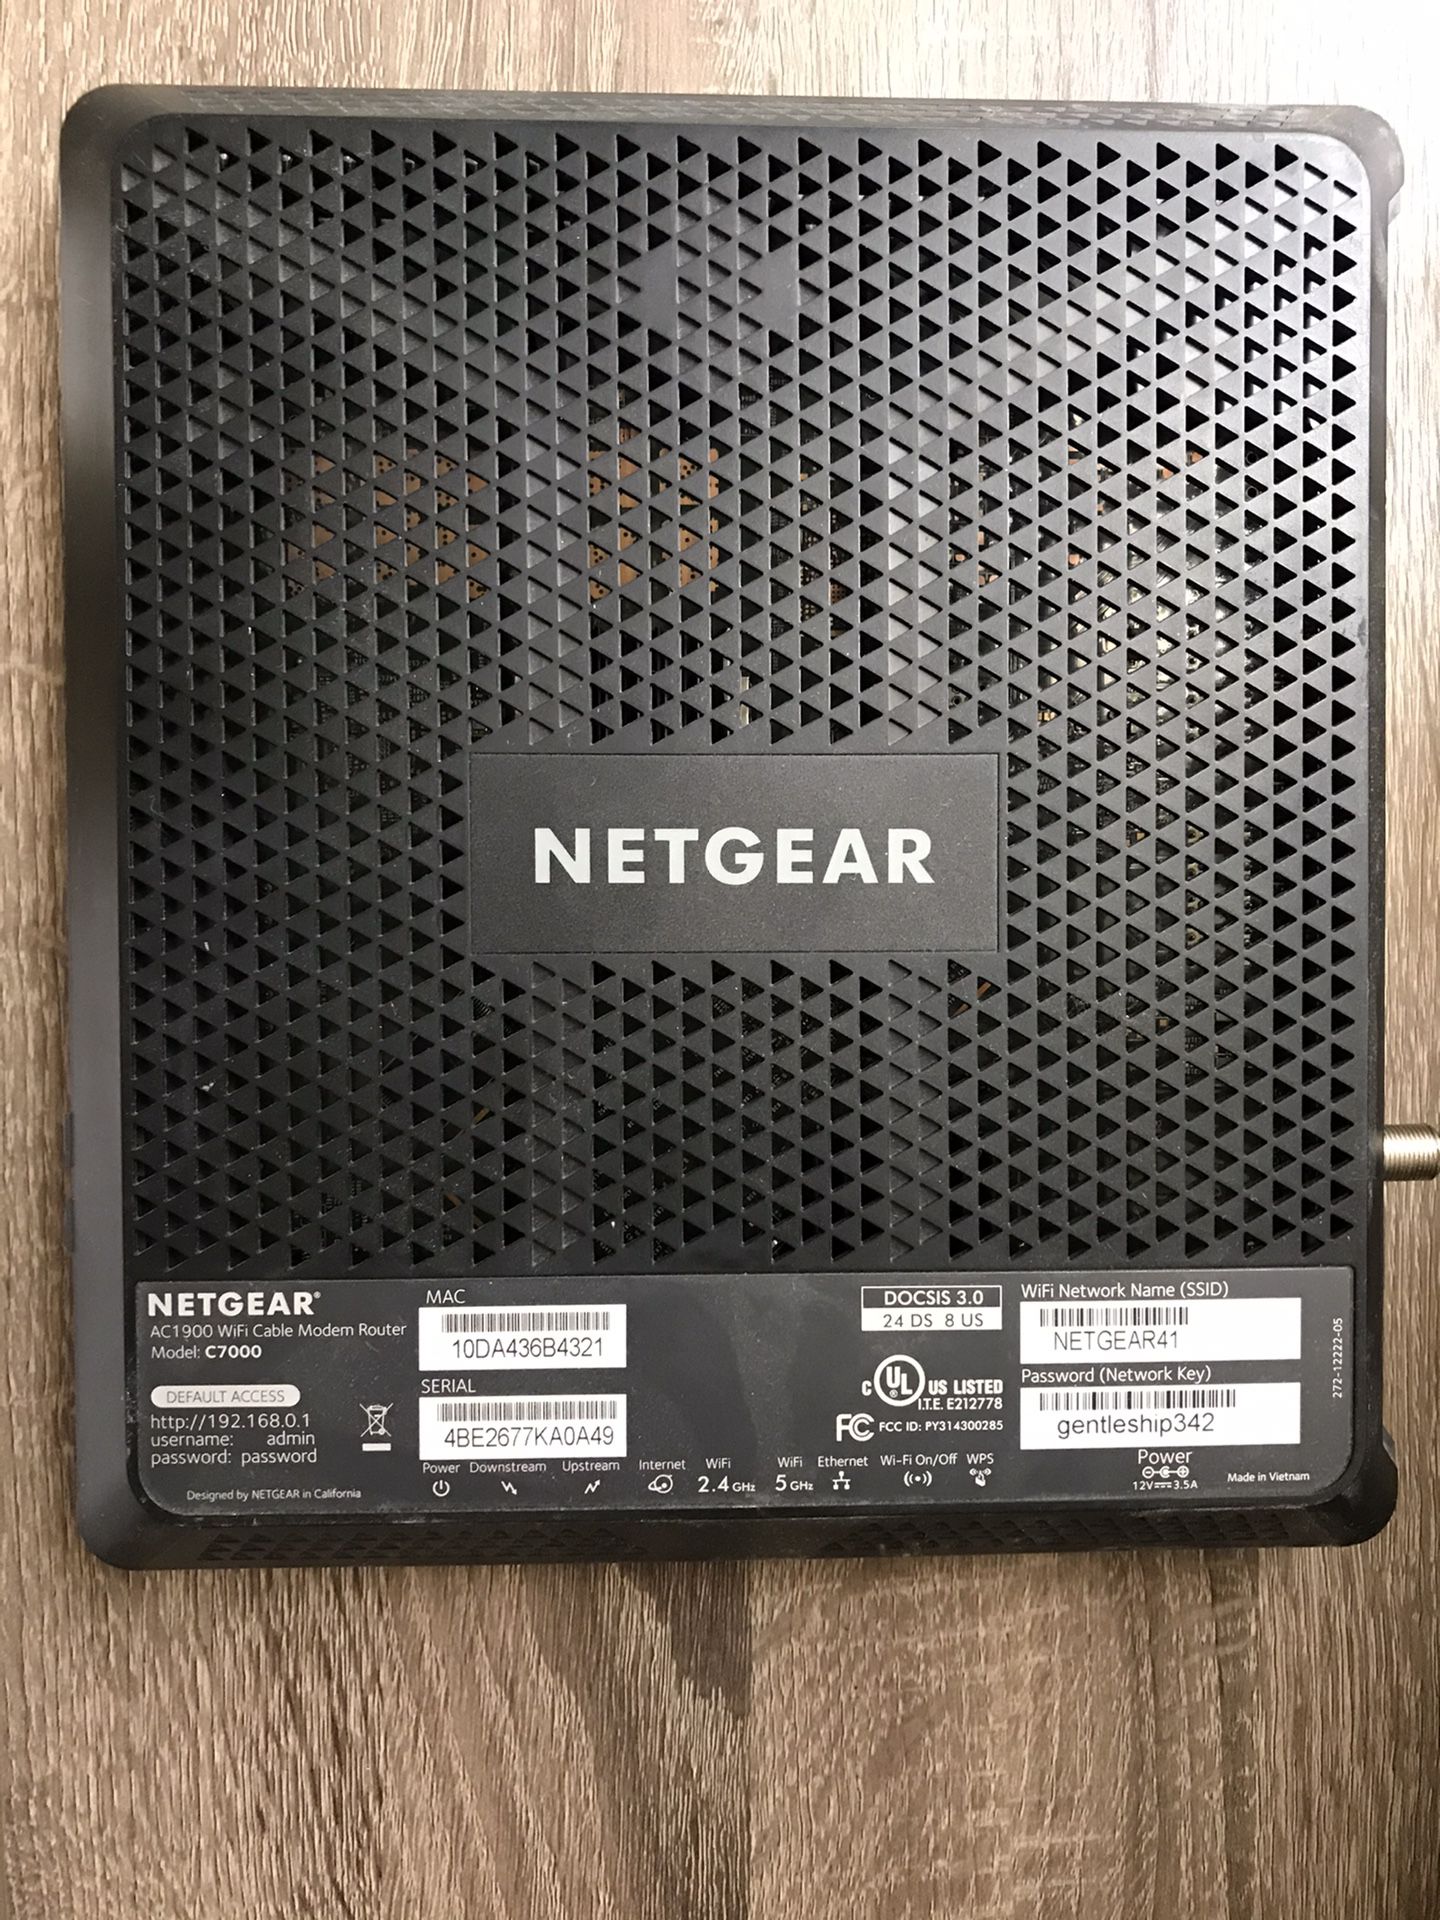 NETGEAR AC1900 WiFi Cable Modem Router